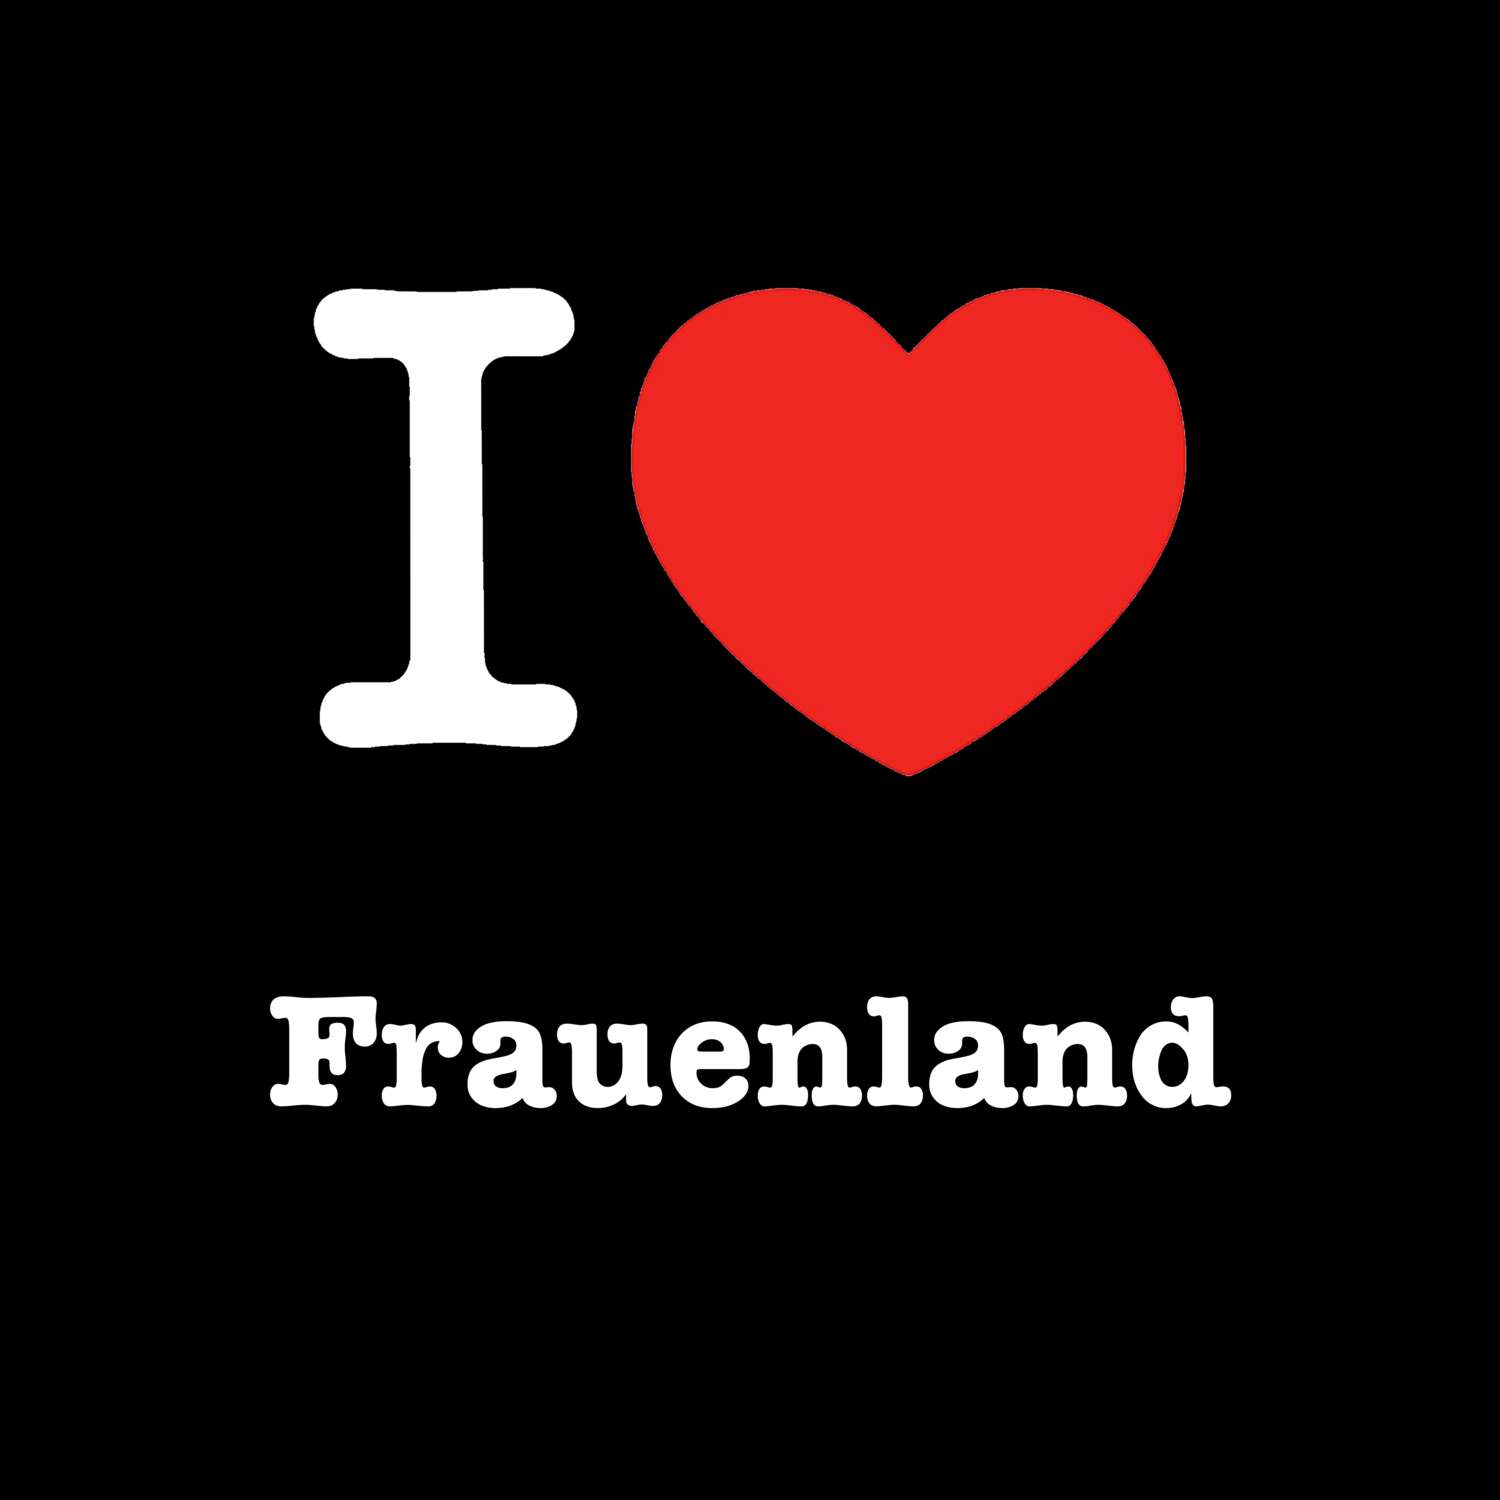 Frauenland T-Shirt »I love«